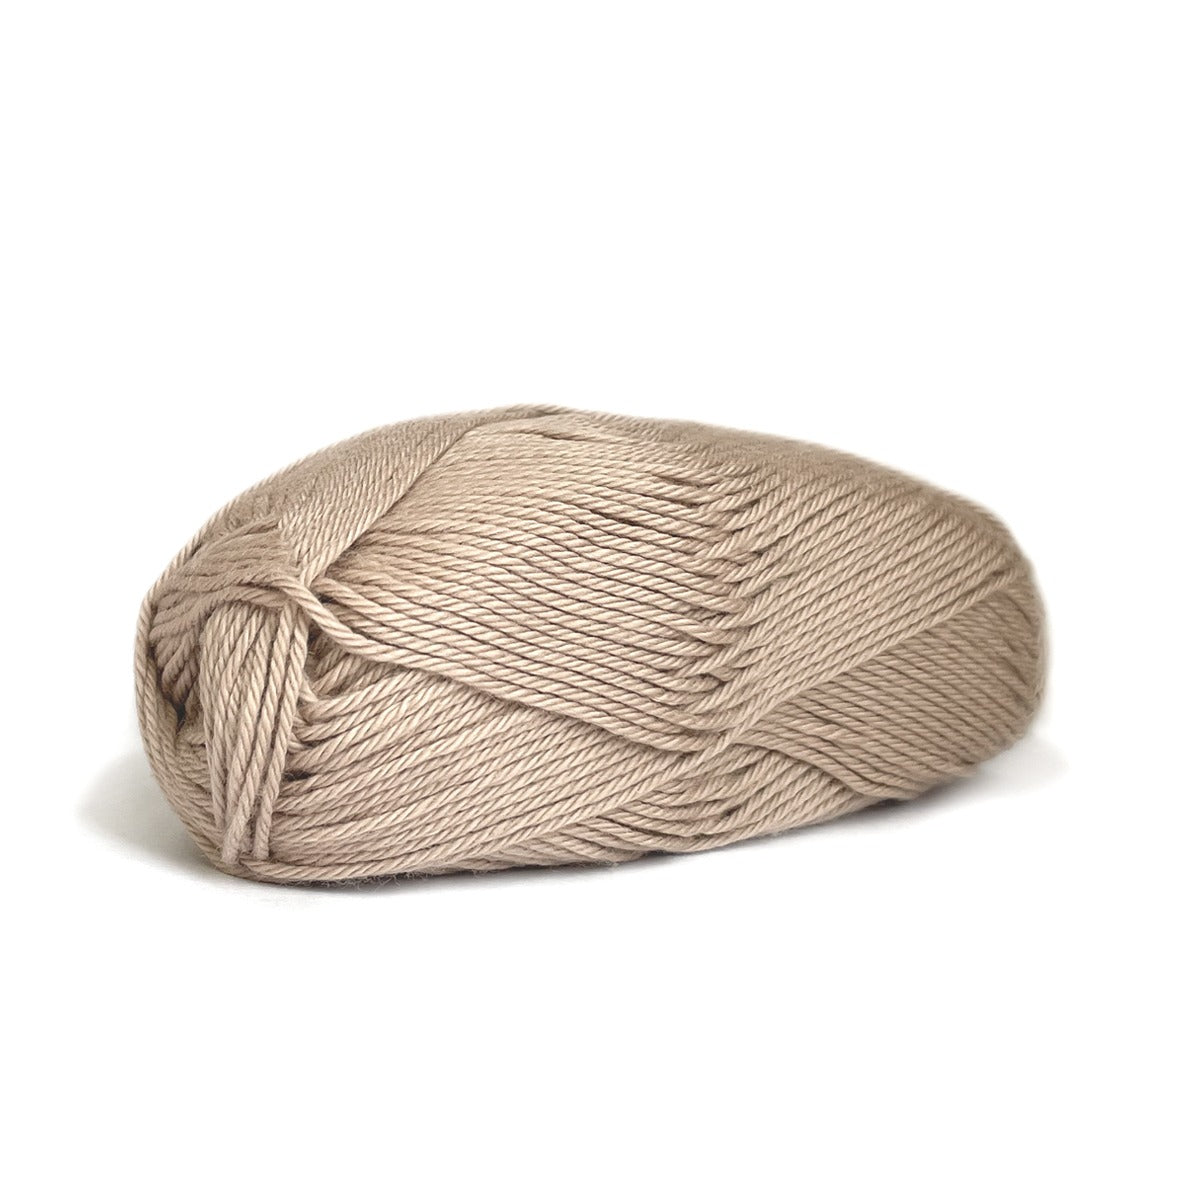 Mercerized Crochet Cotton Cape Top